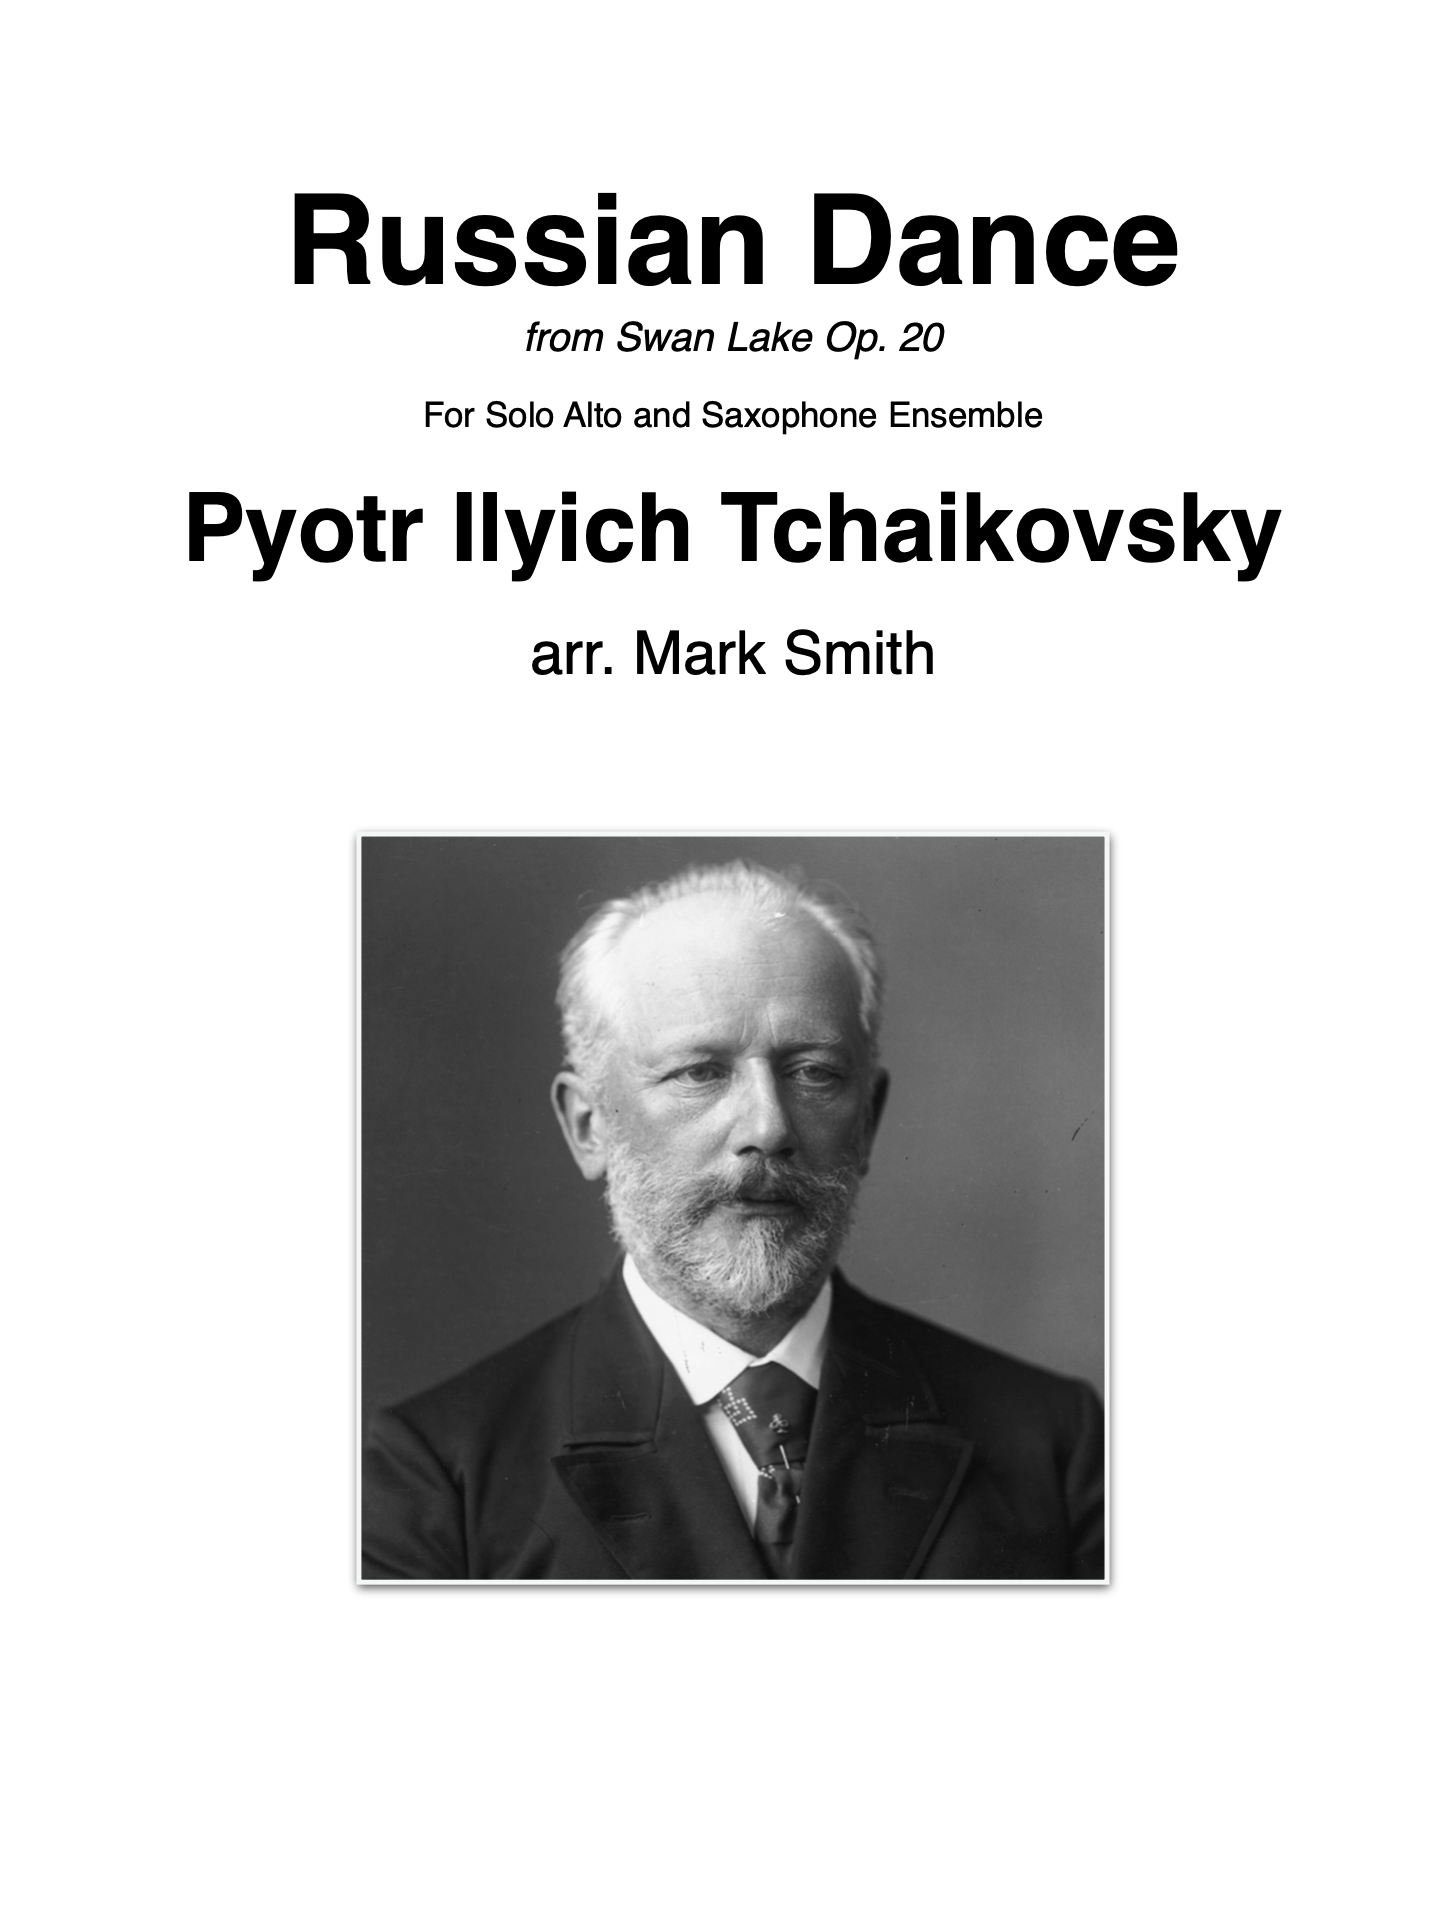 Russian Dance by Tchaikovsky, arr. Mark Smith